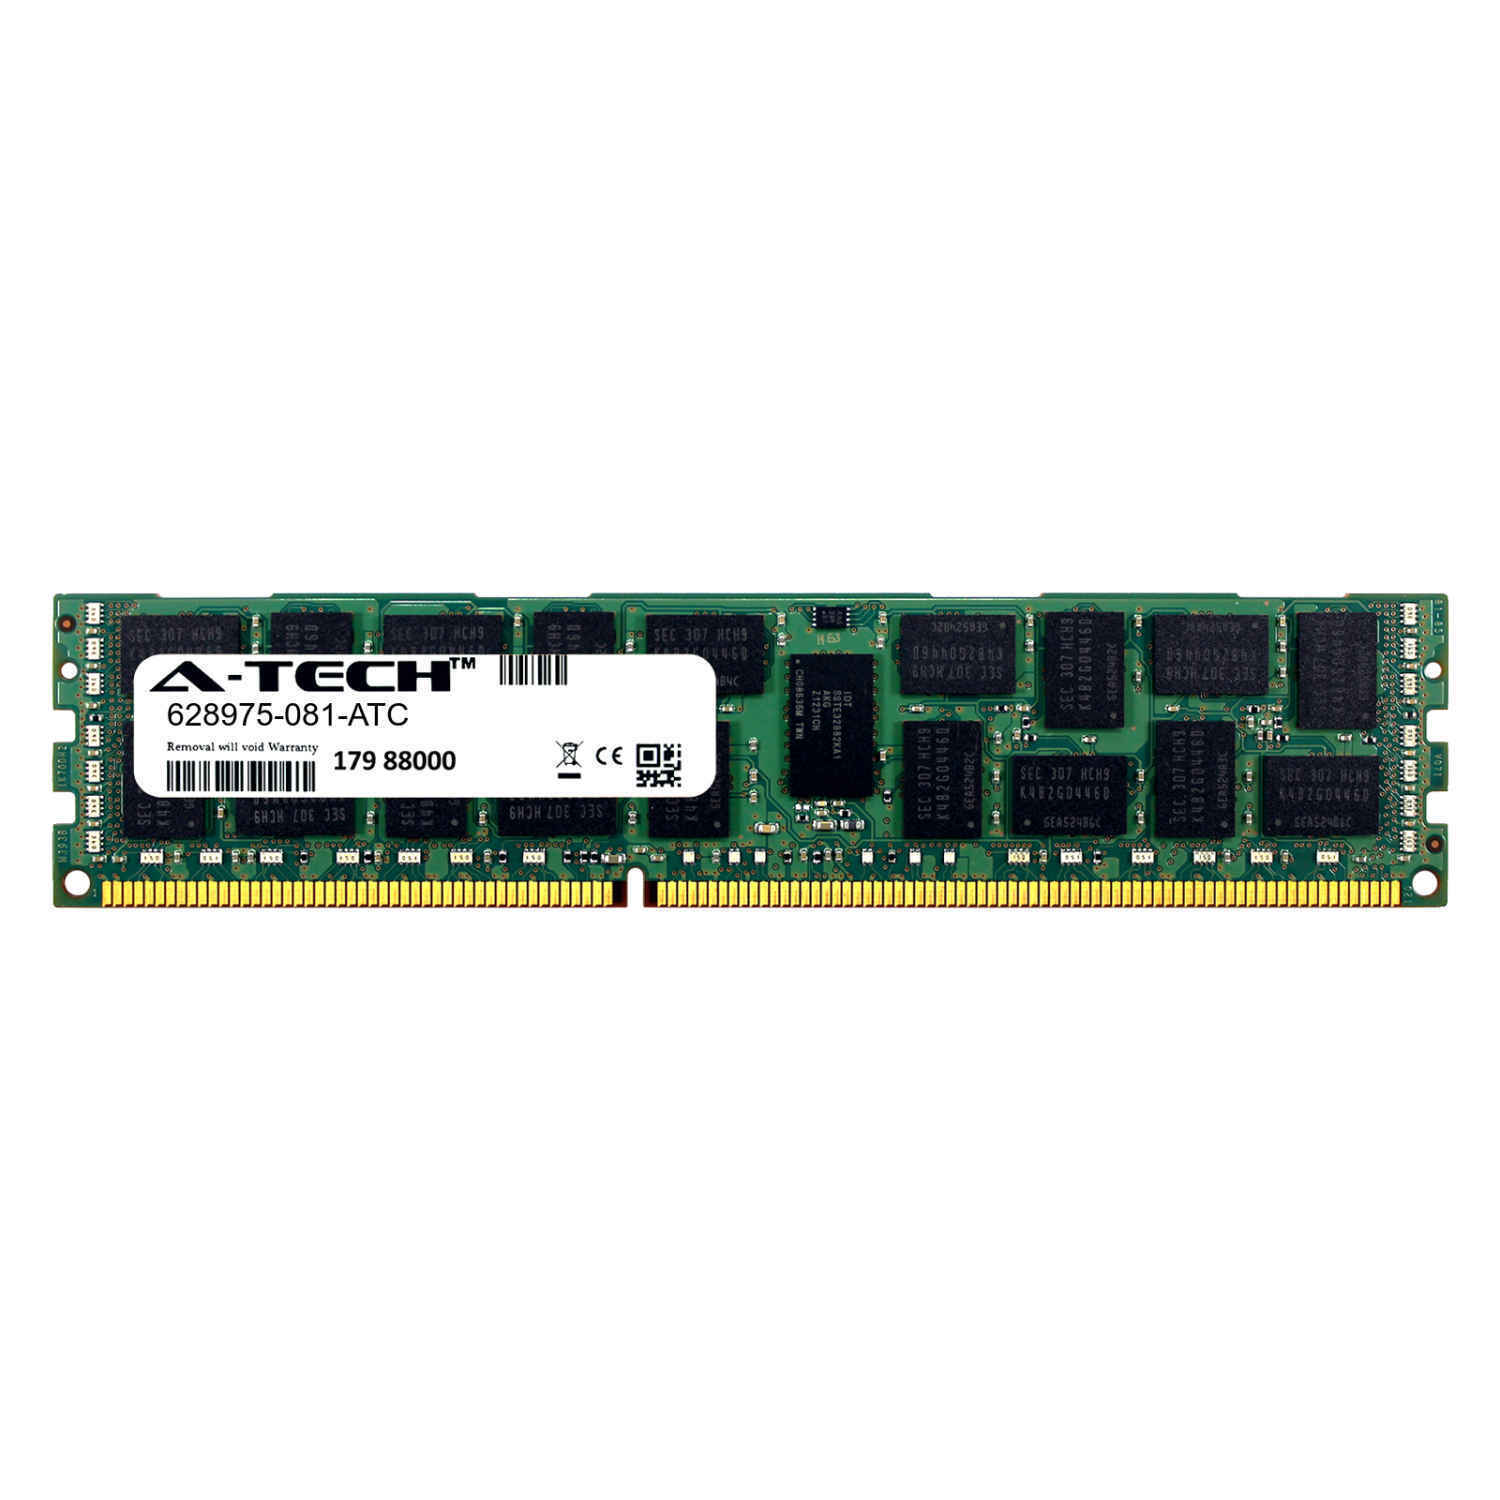 32GB DDR3 PC3-8500R 1066MHz RDIMM (HP 628975-081 Equivalent) Server Memory RAM